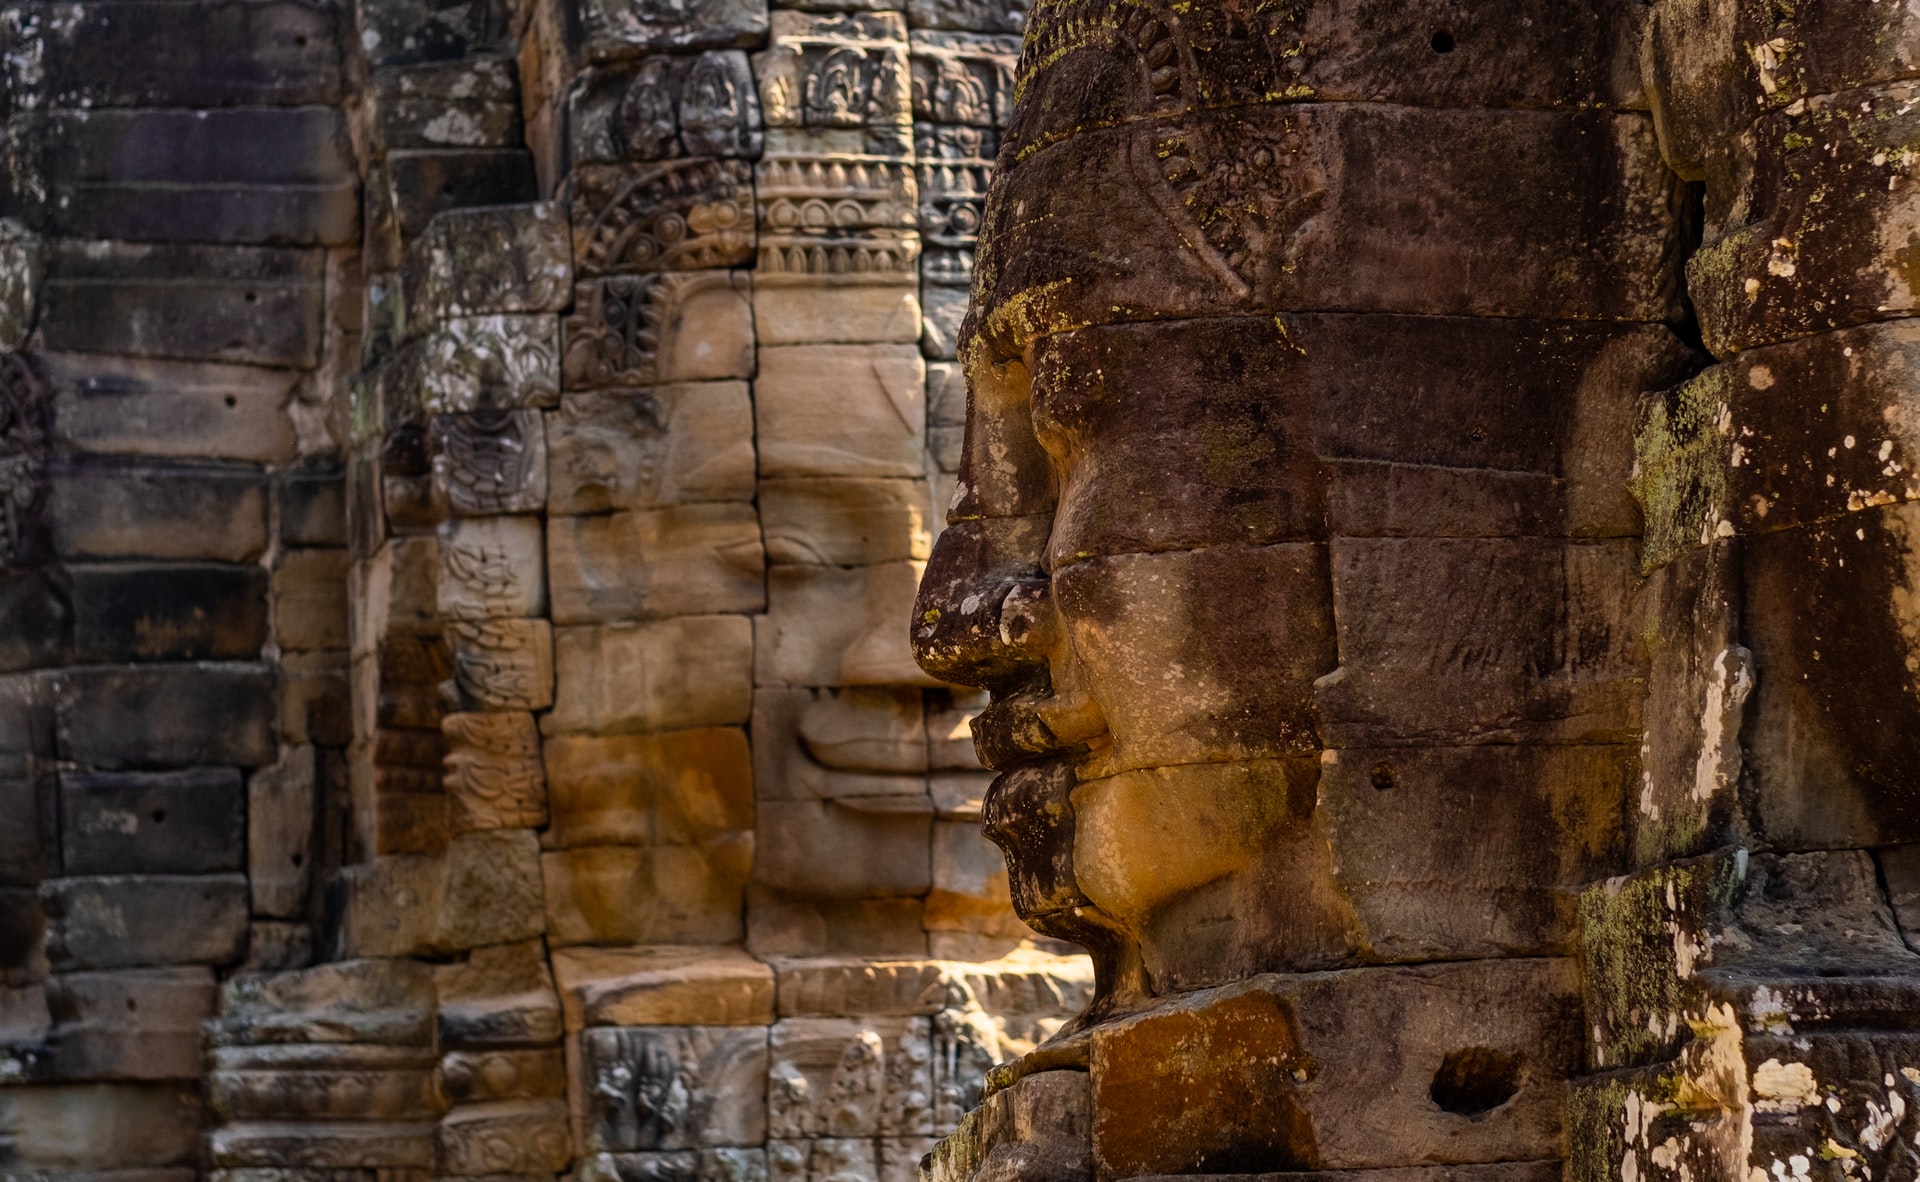 Bayon Temple, Siem Reap, Cambodia